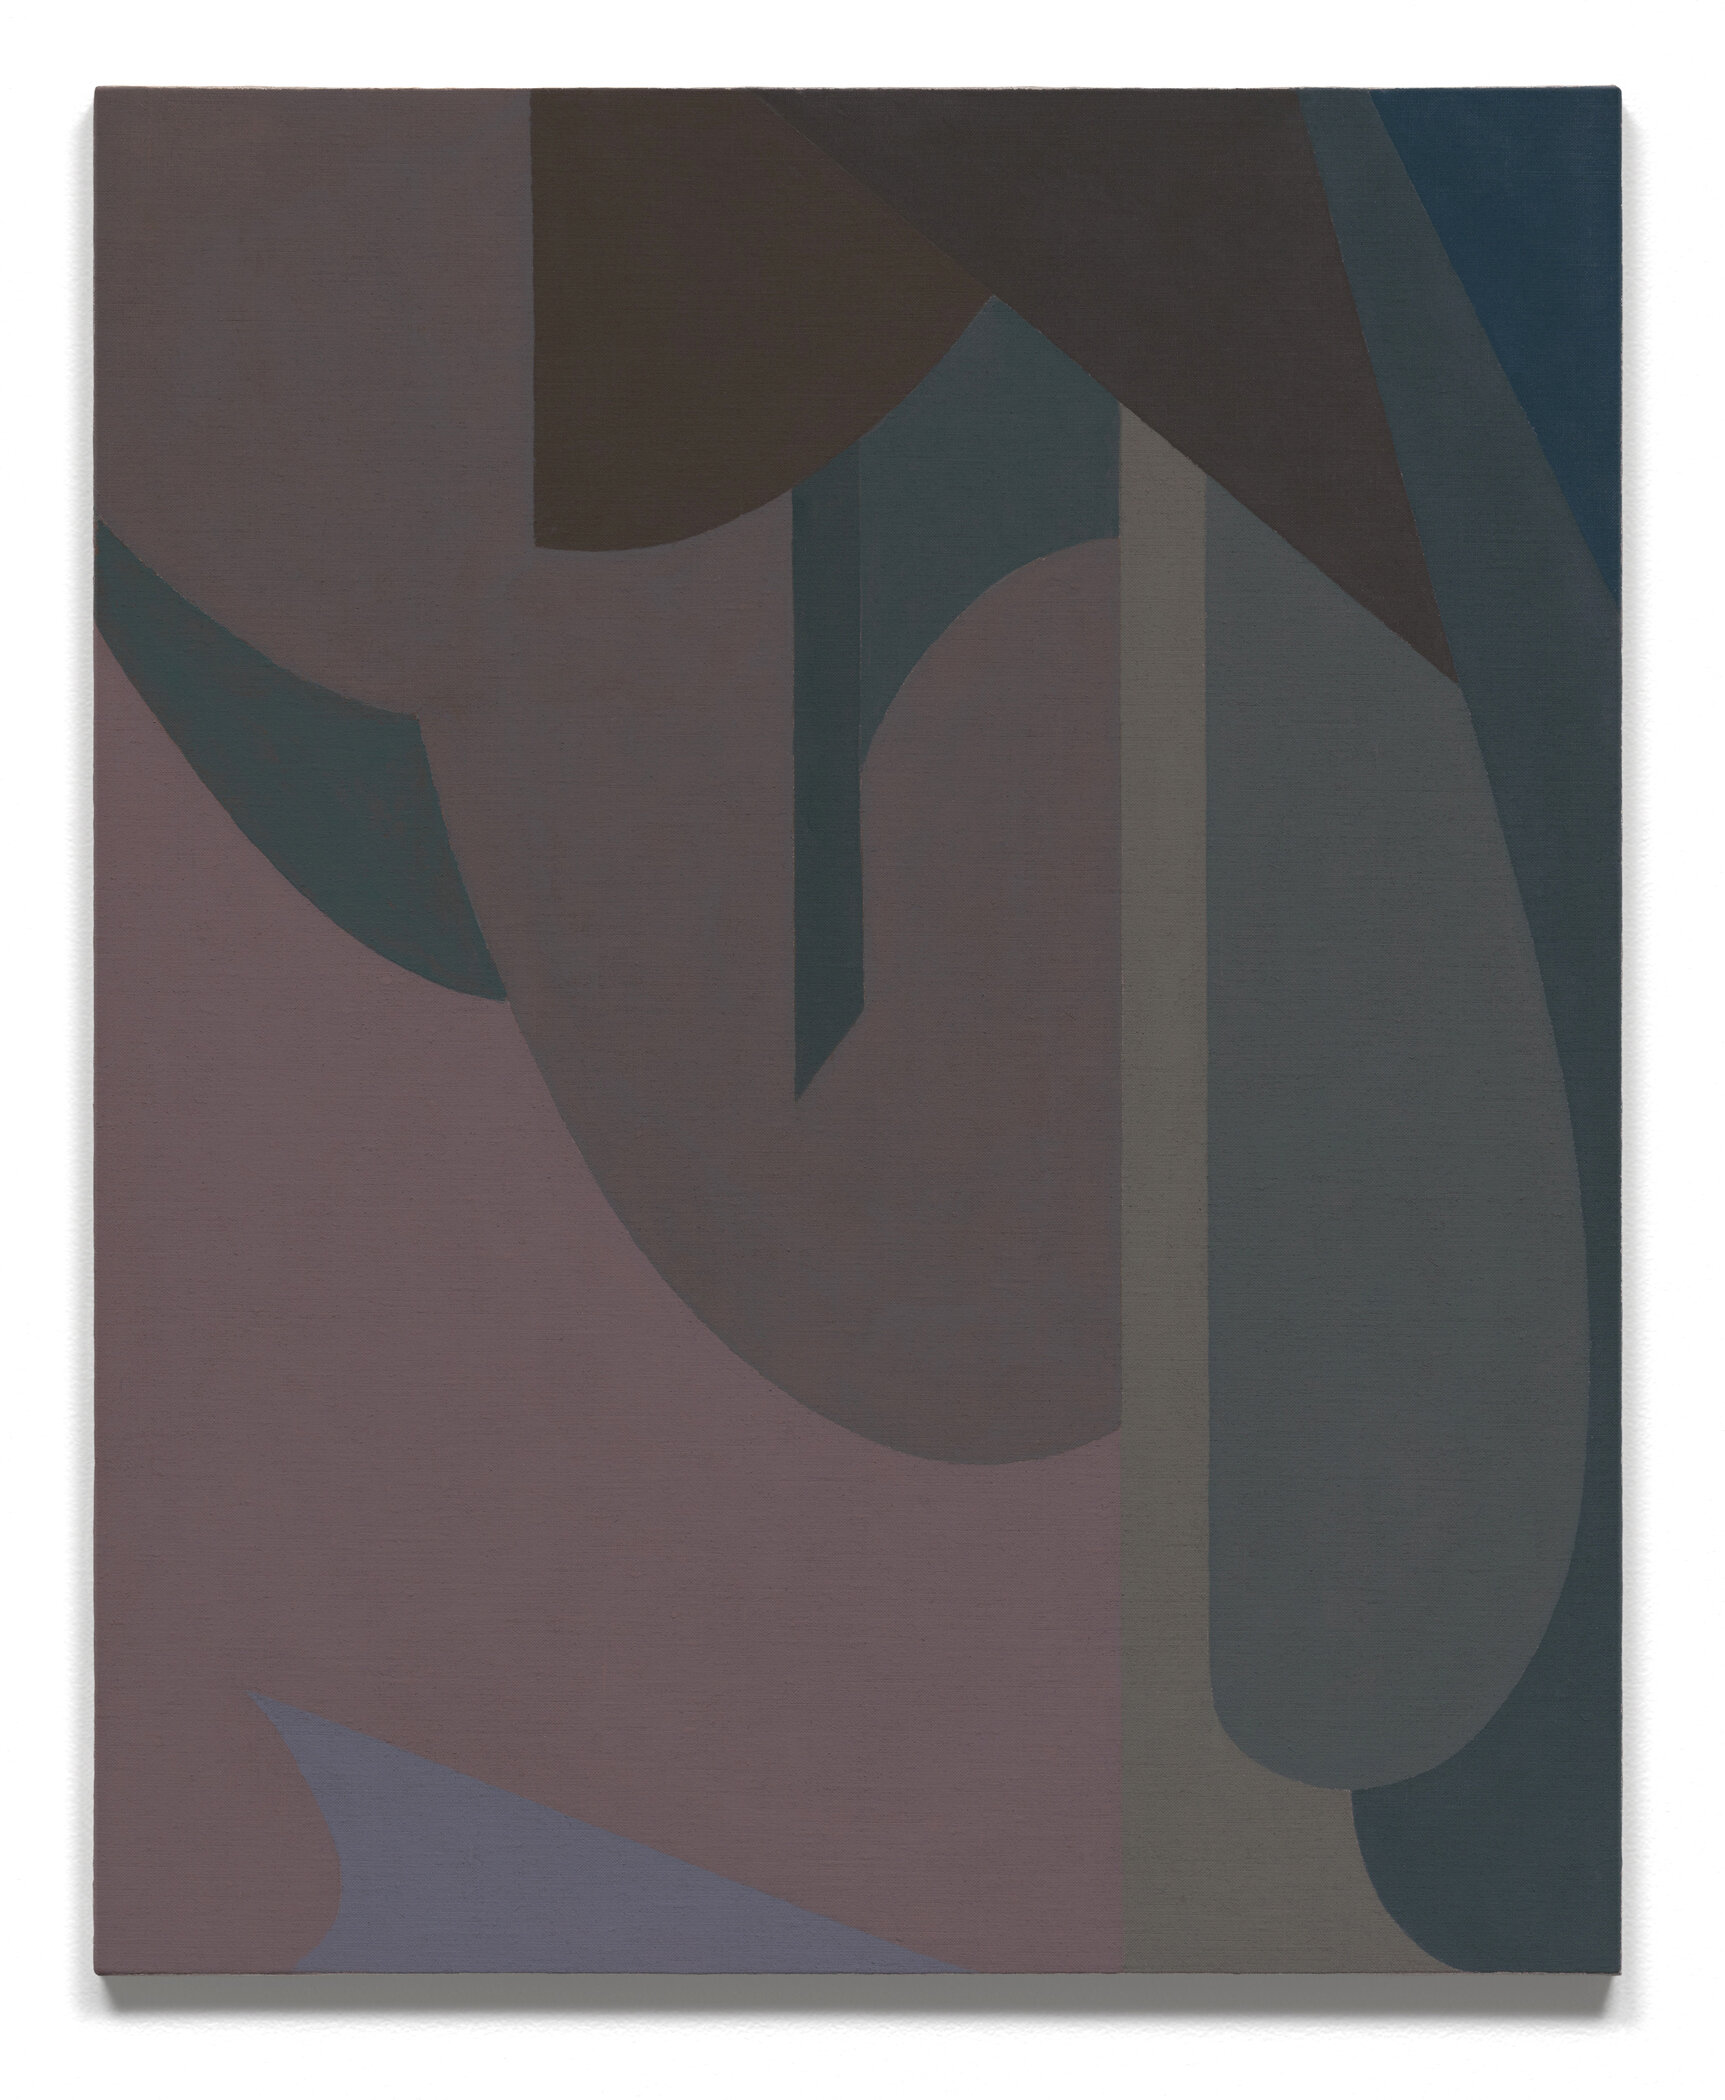  NANCY WHITE  Untitled (4-2019) , 2019 acrylic on linen mounted to panel 16 x 13" x 3/8" 